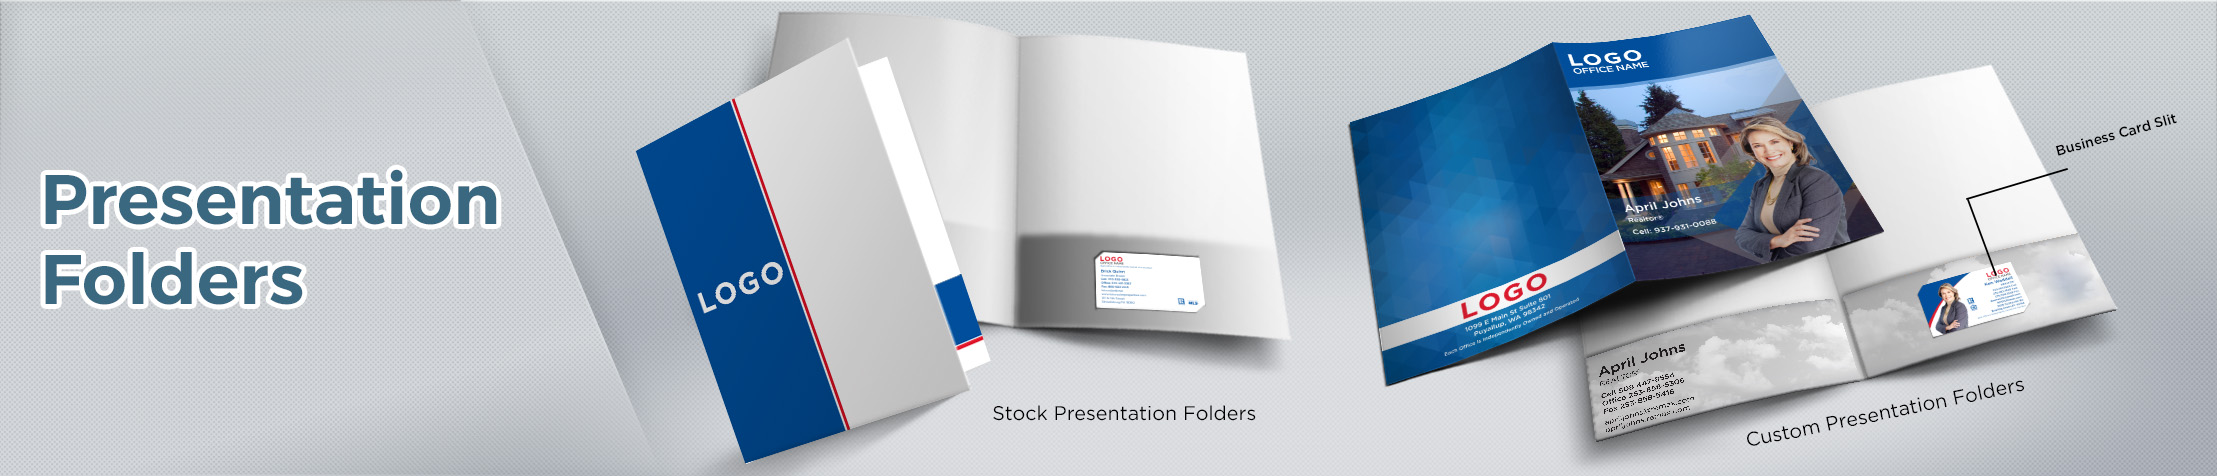 RE/MAX Real Estate Presentation Folders - folders | BestPrintBuy.com